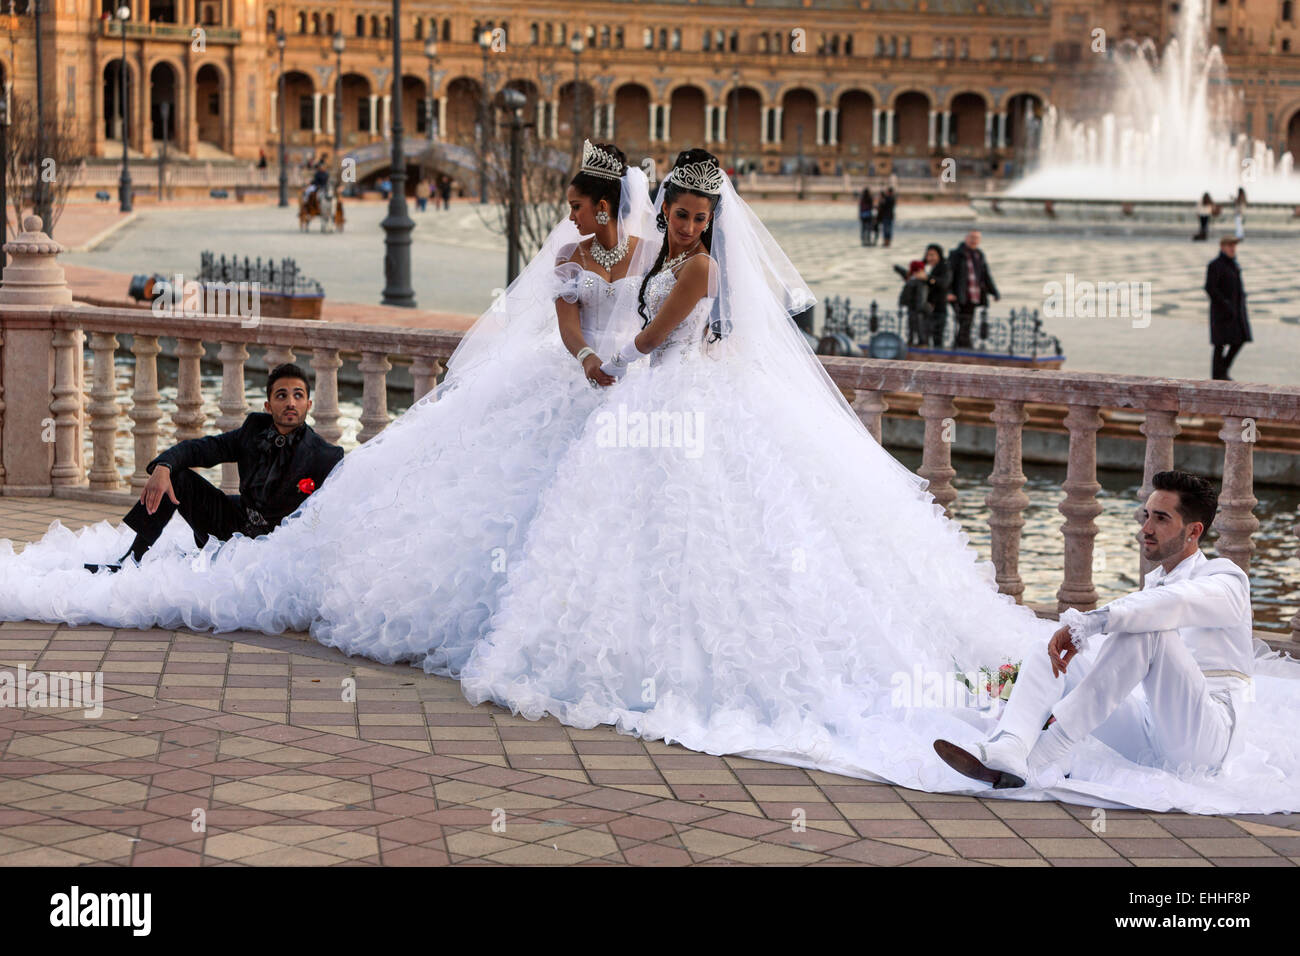 Gypsy wedding dress -Fotos und -Bildmaterial in hoher Auflösung – Alamy